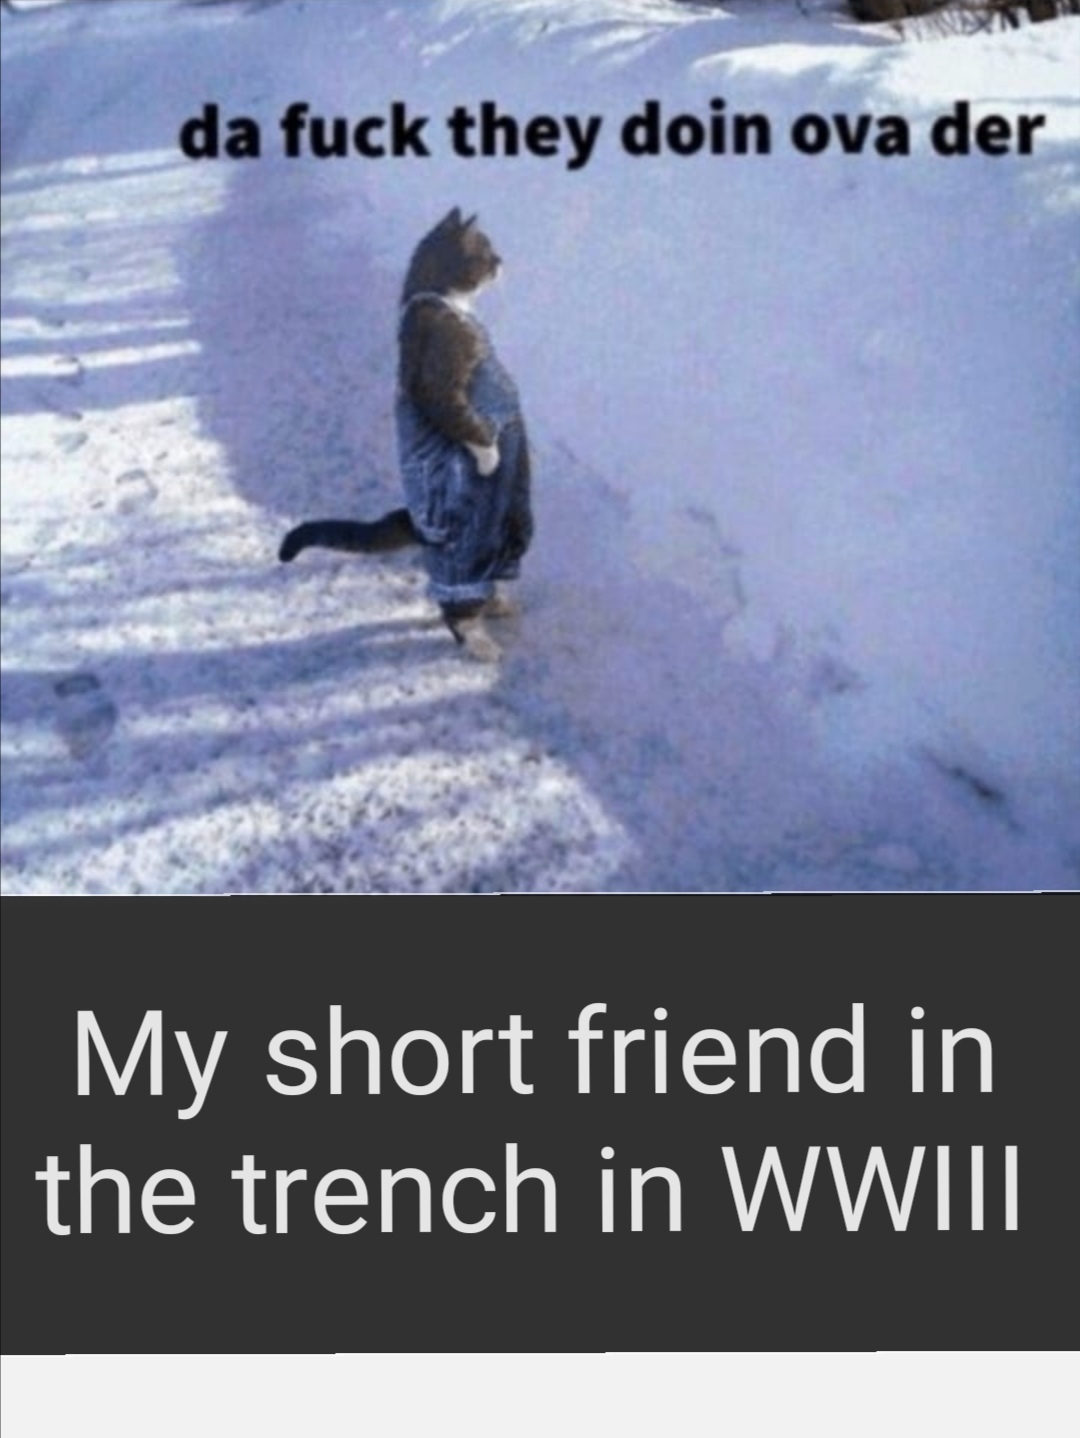 World War III - meme